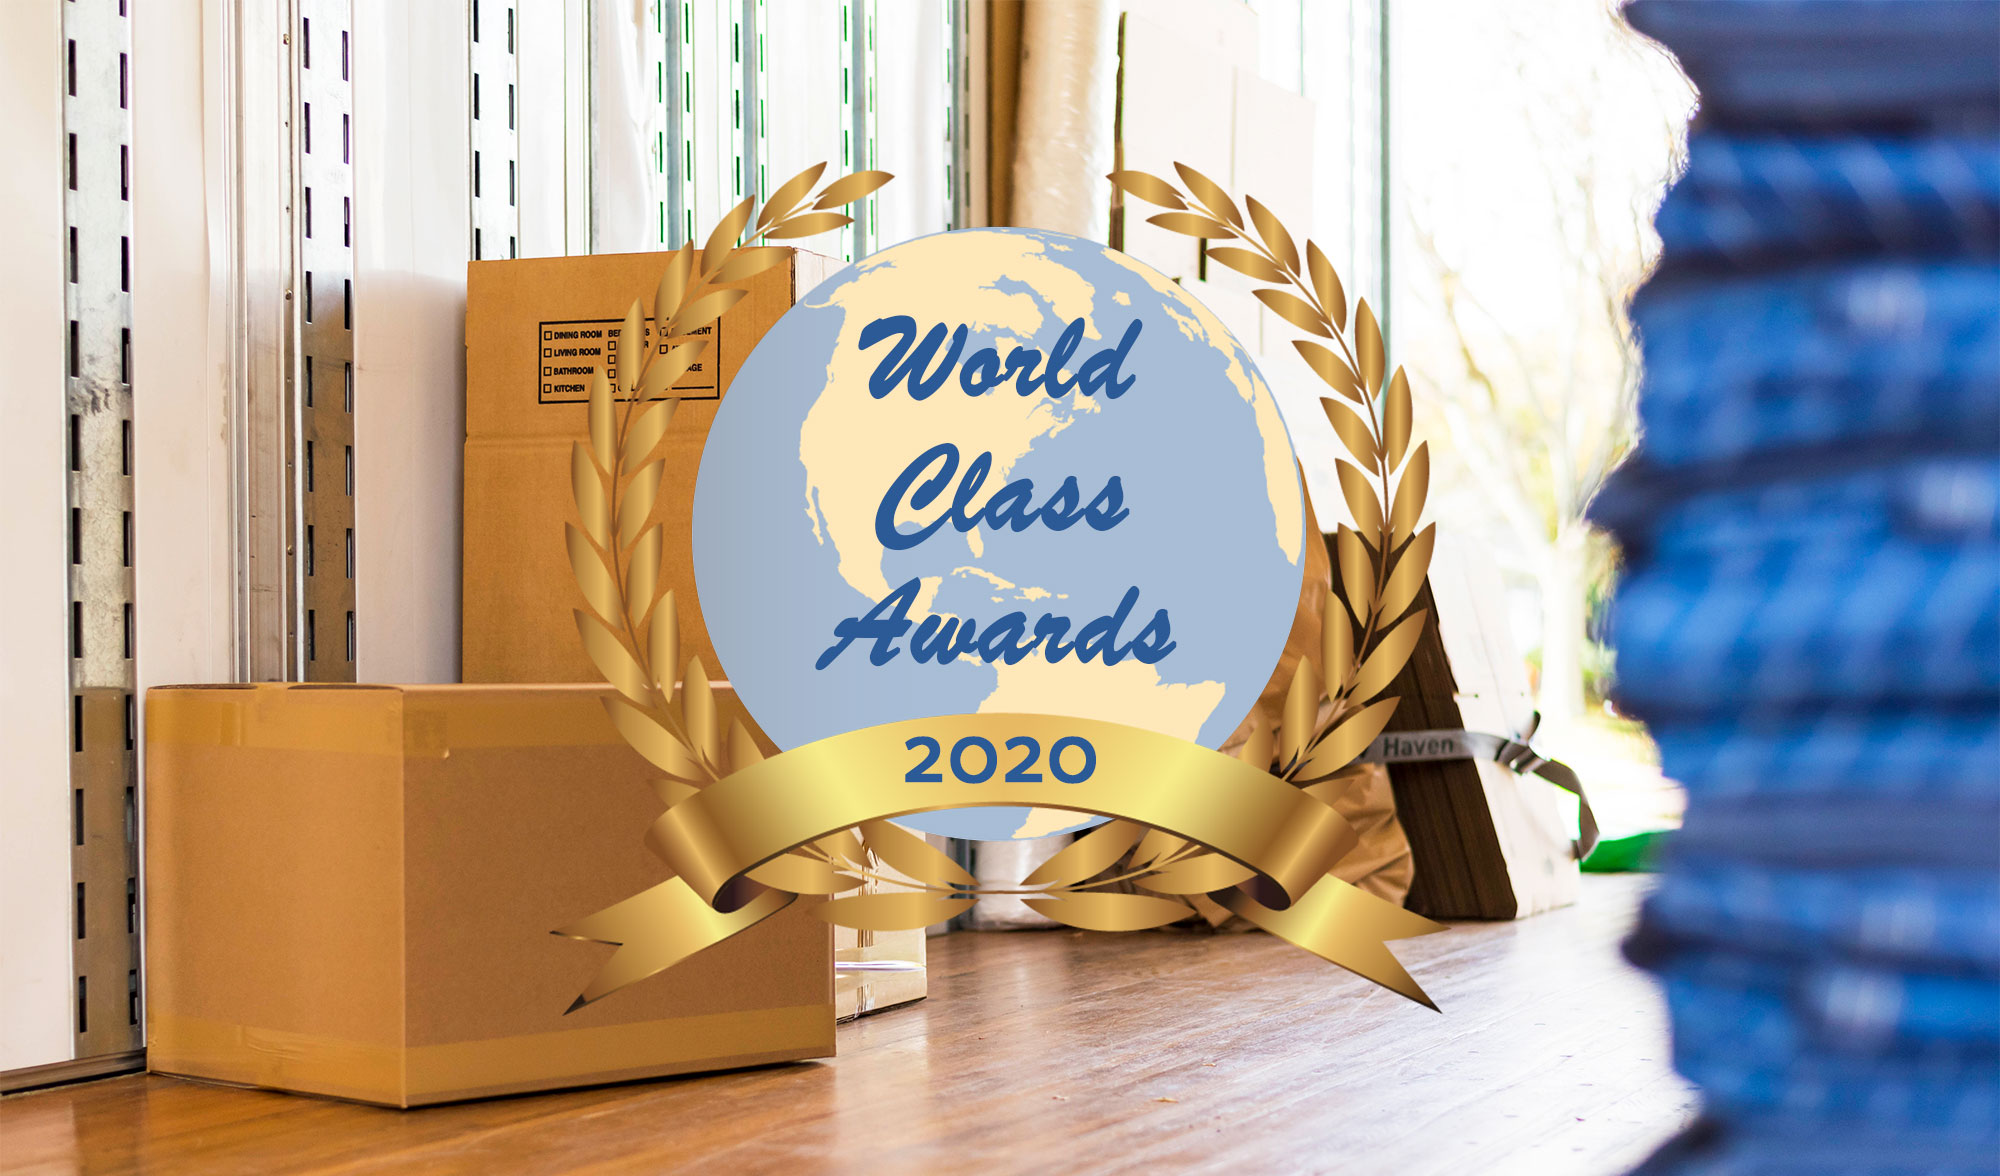 New World’s 2020 World Class Awards